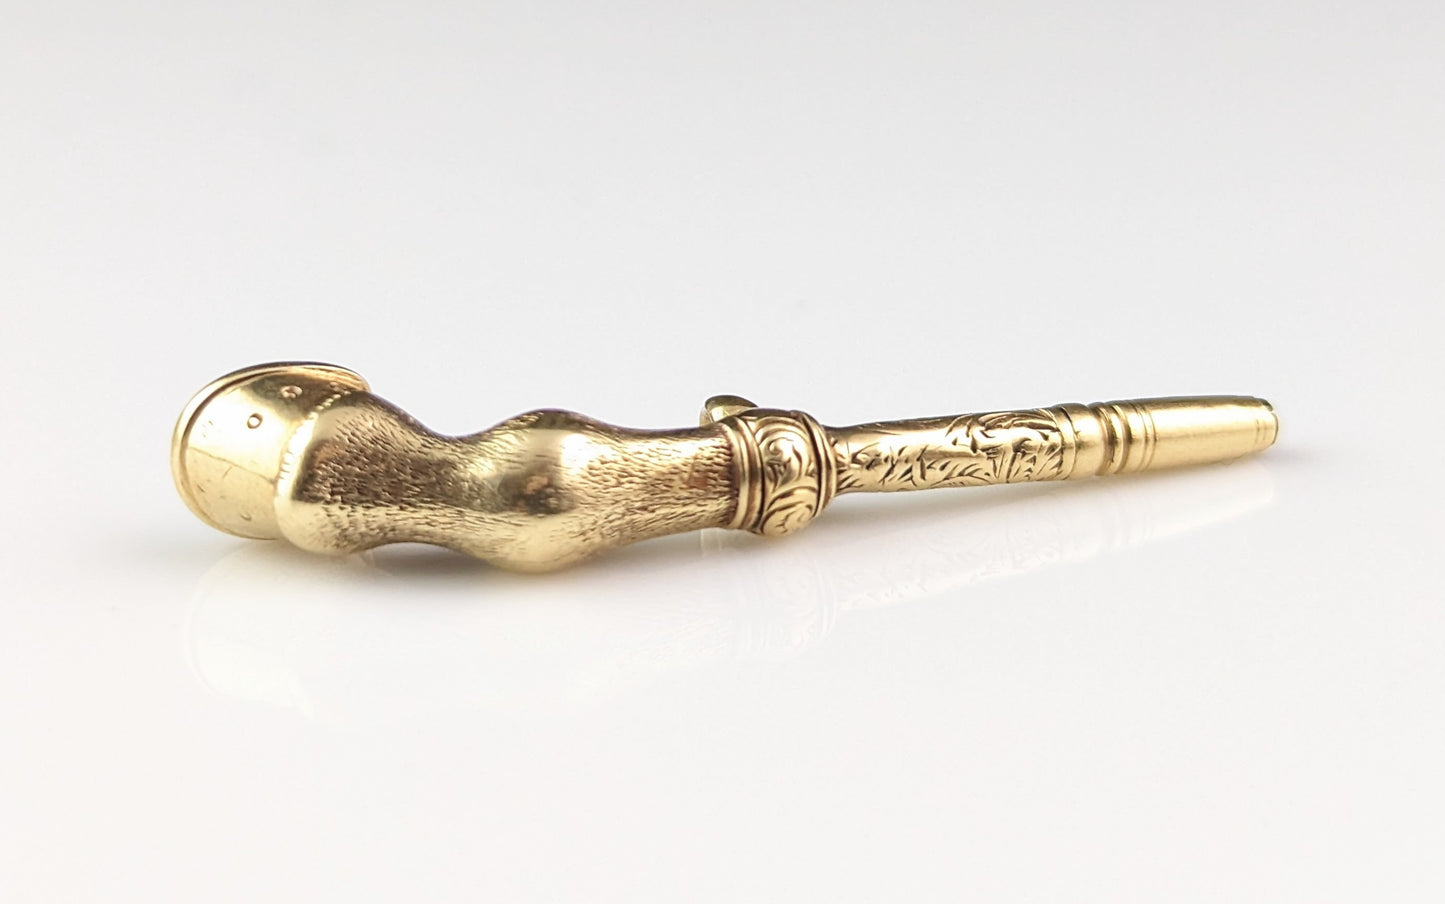 Antique 9ct gold Horse Hoof watch key, Fob pendant, Victorian